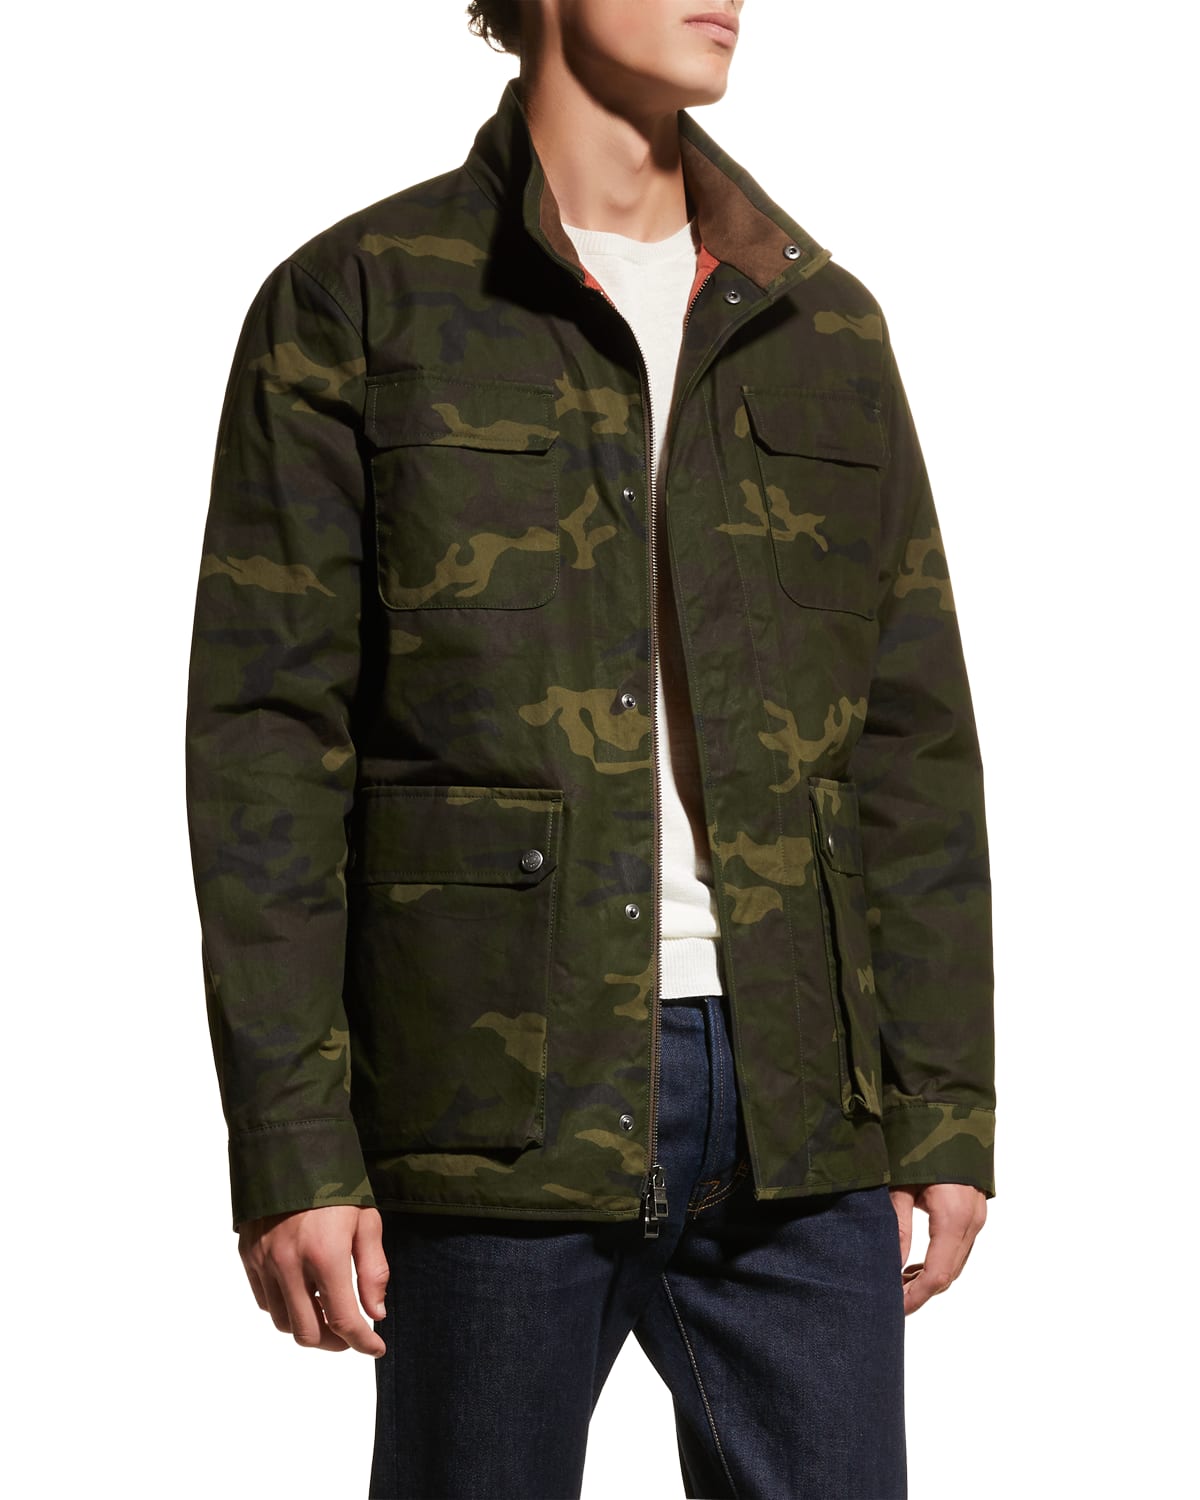 Peter Millar Men's Waxed Cotton Camouflage Field Jacket